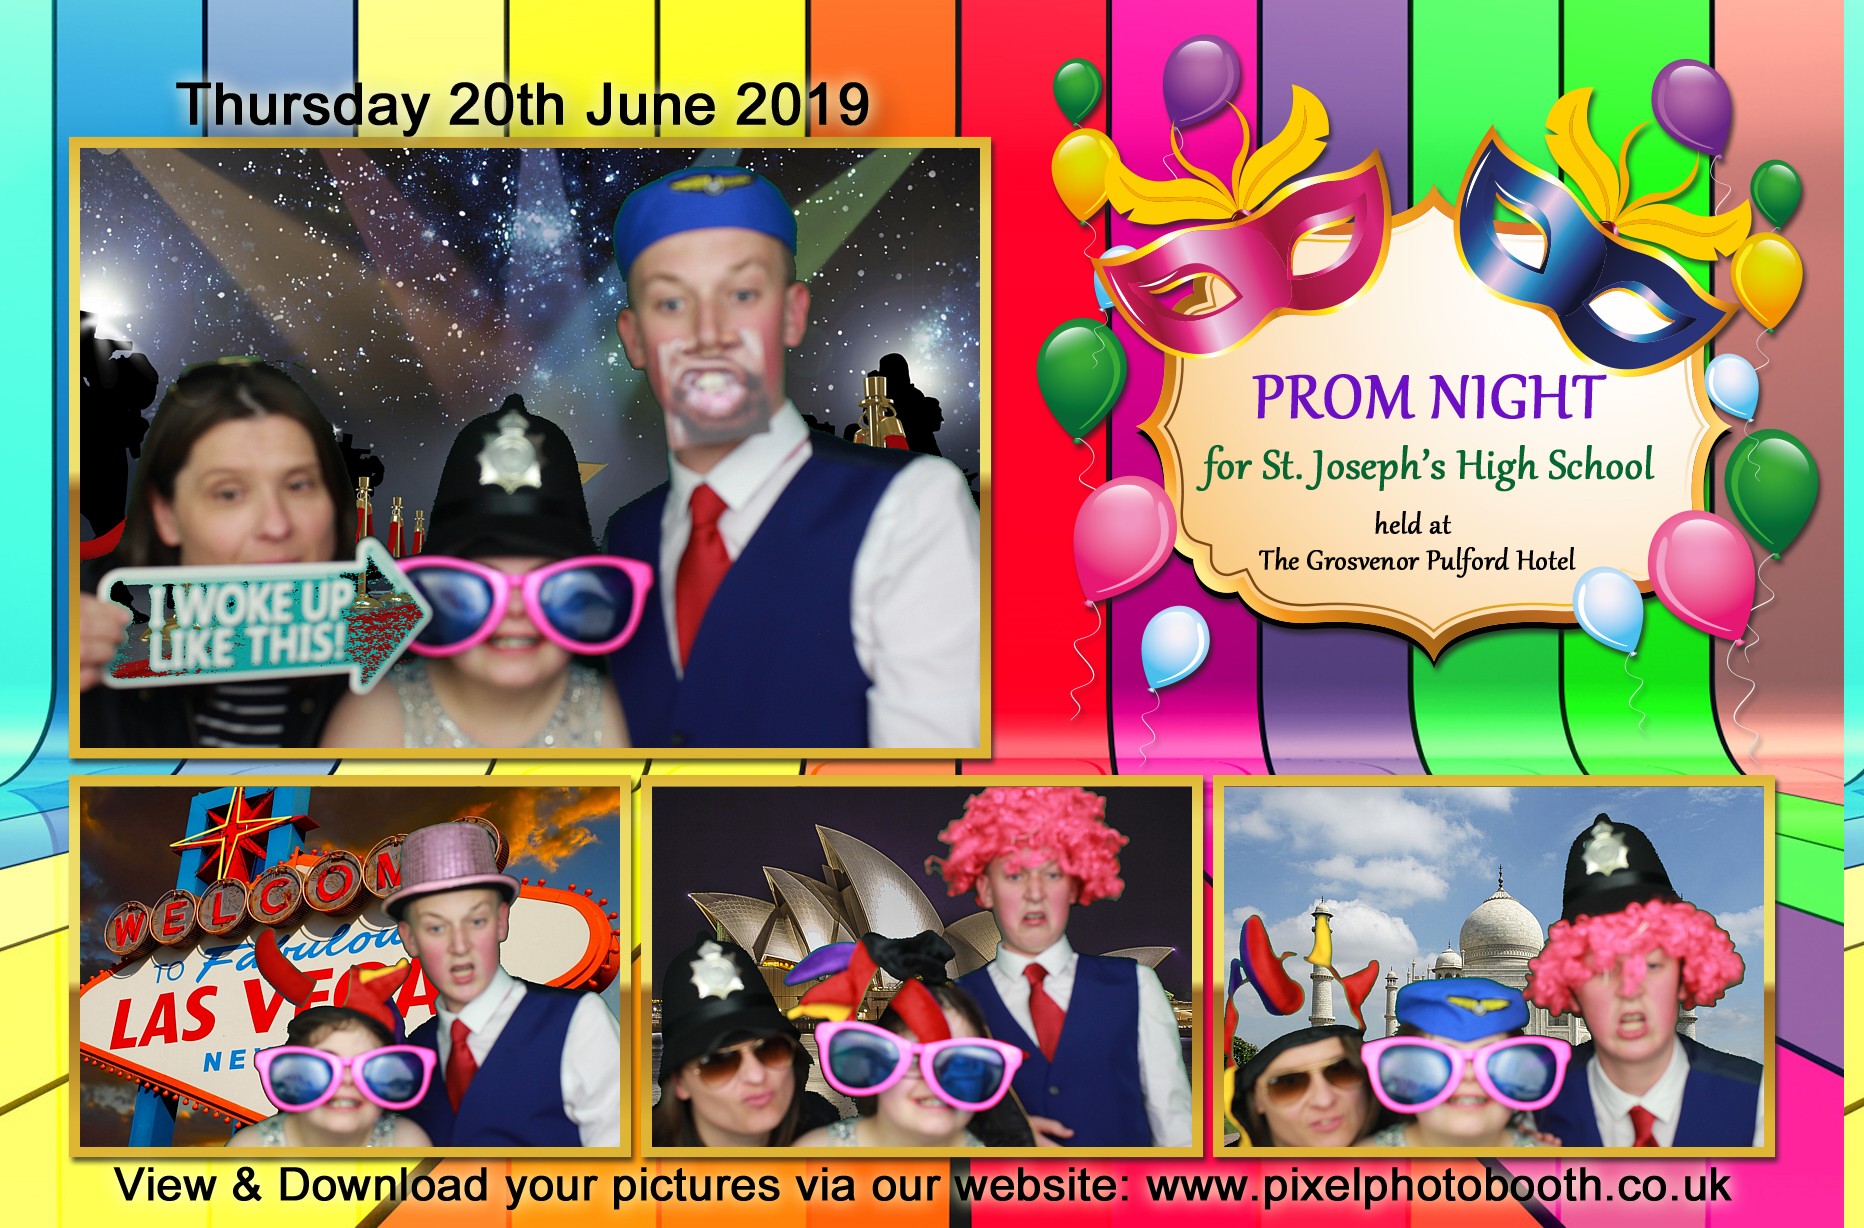 20th June 2019: St. Joseph's High School Prom at The Grosvenor Pulford